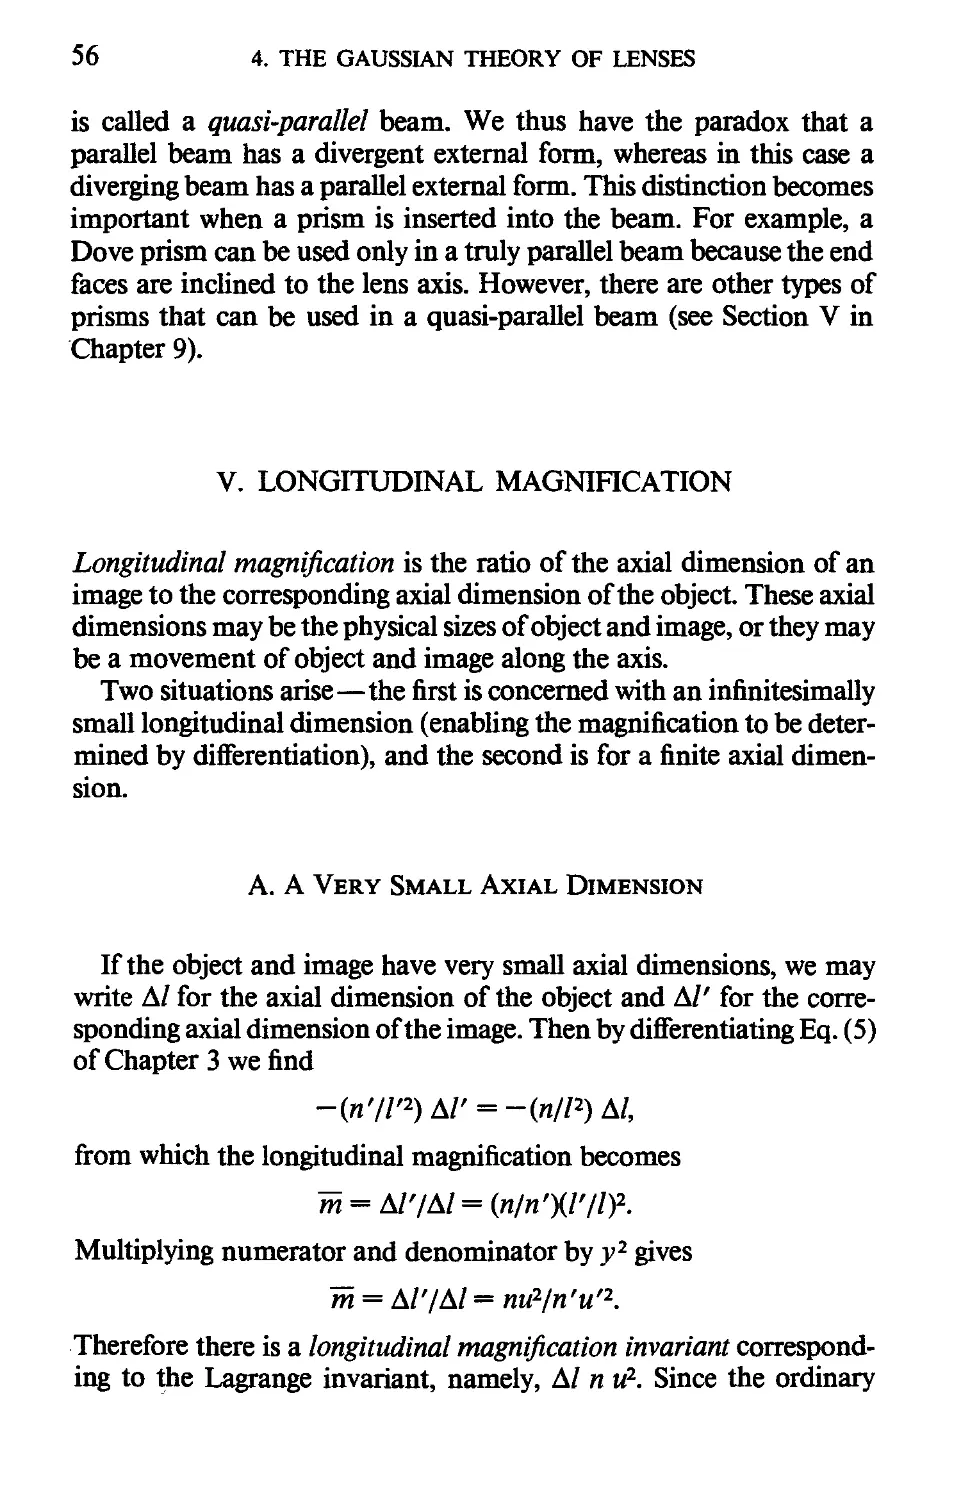 V. Longitudinal Magnification